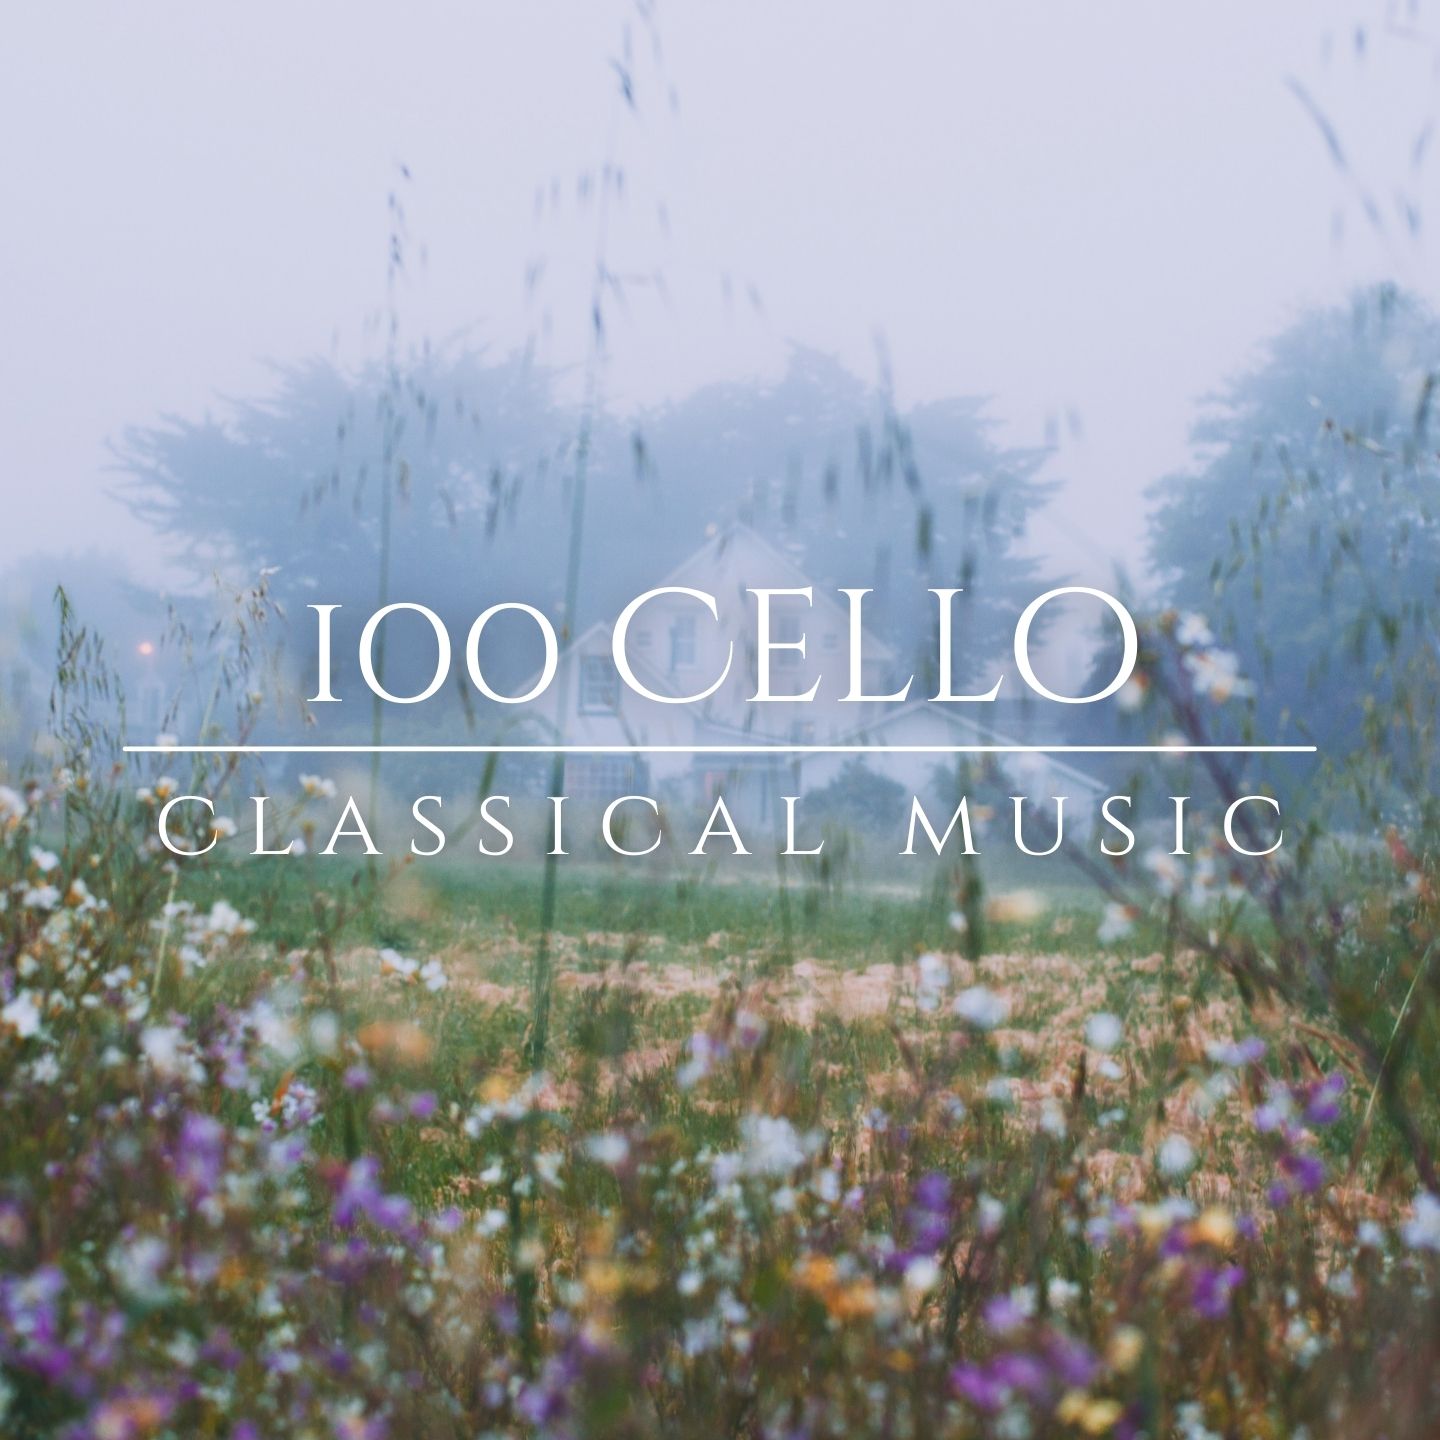 100 Cello - Classical Music - Halidon